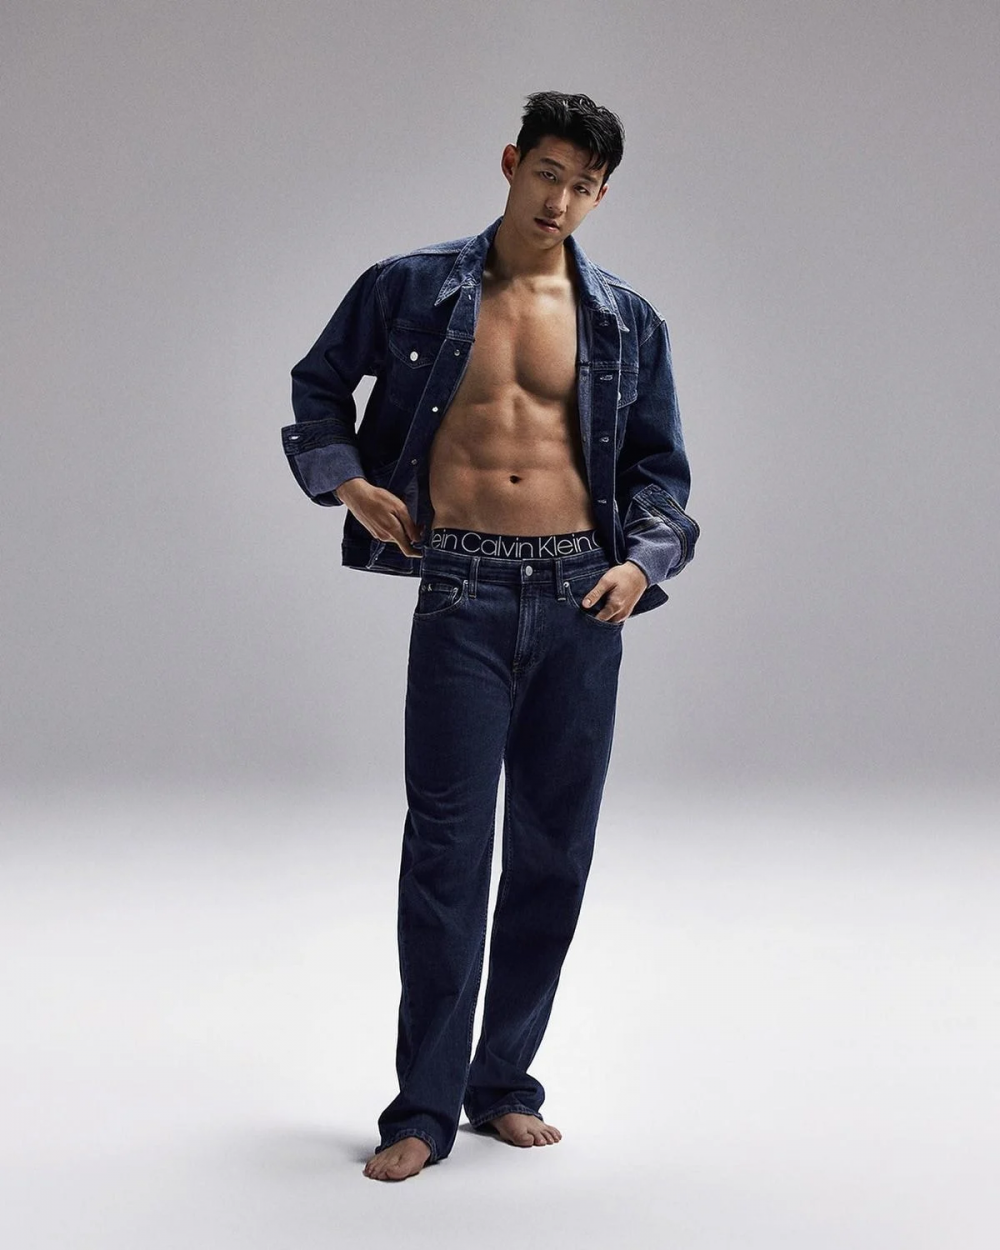 Calvin Klein unveils Son Heung Min's pictorial for their 2023 Spring ...